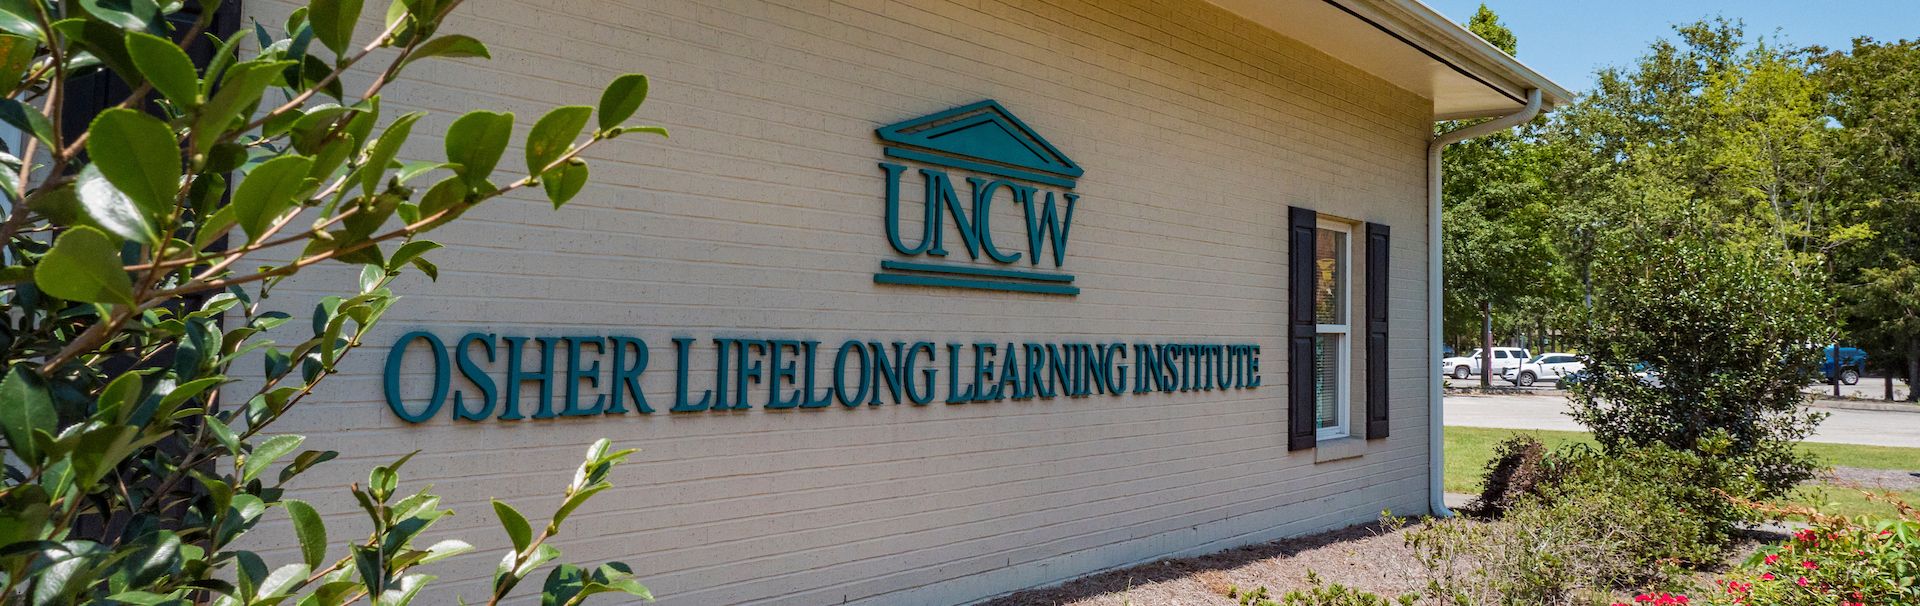 Osher Lifelong Learning Institute building exterior